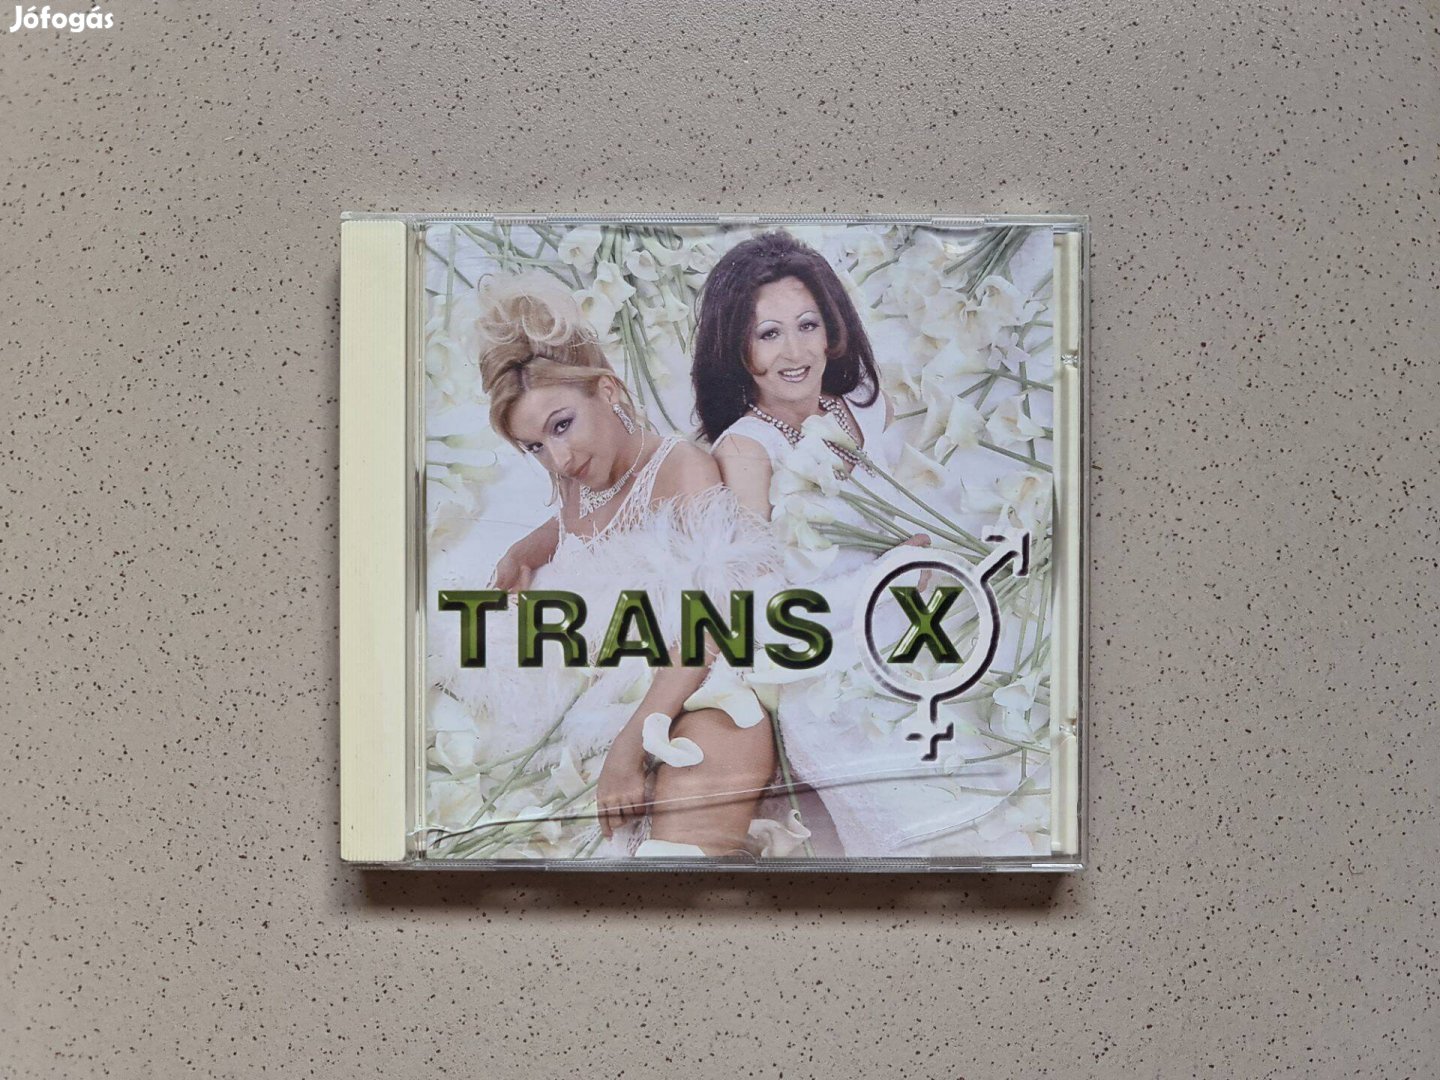 Trans x cd lemez